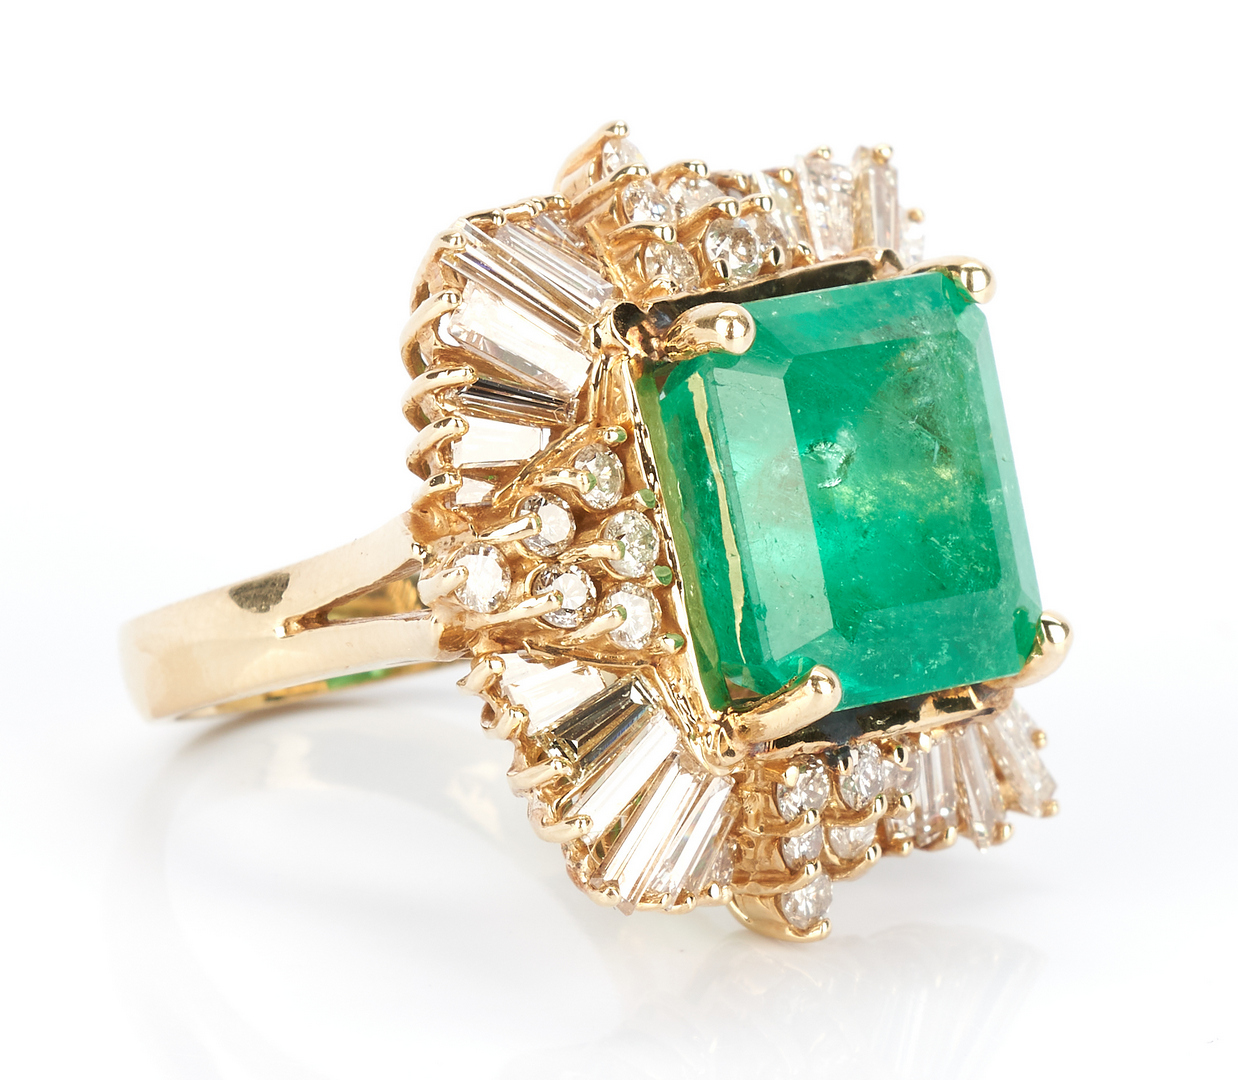 Lot 256: Ladies 14K Square Cut 13.8 Carat Emerald & Diamond Ring